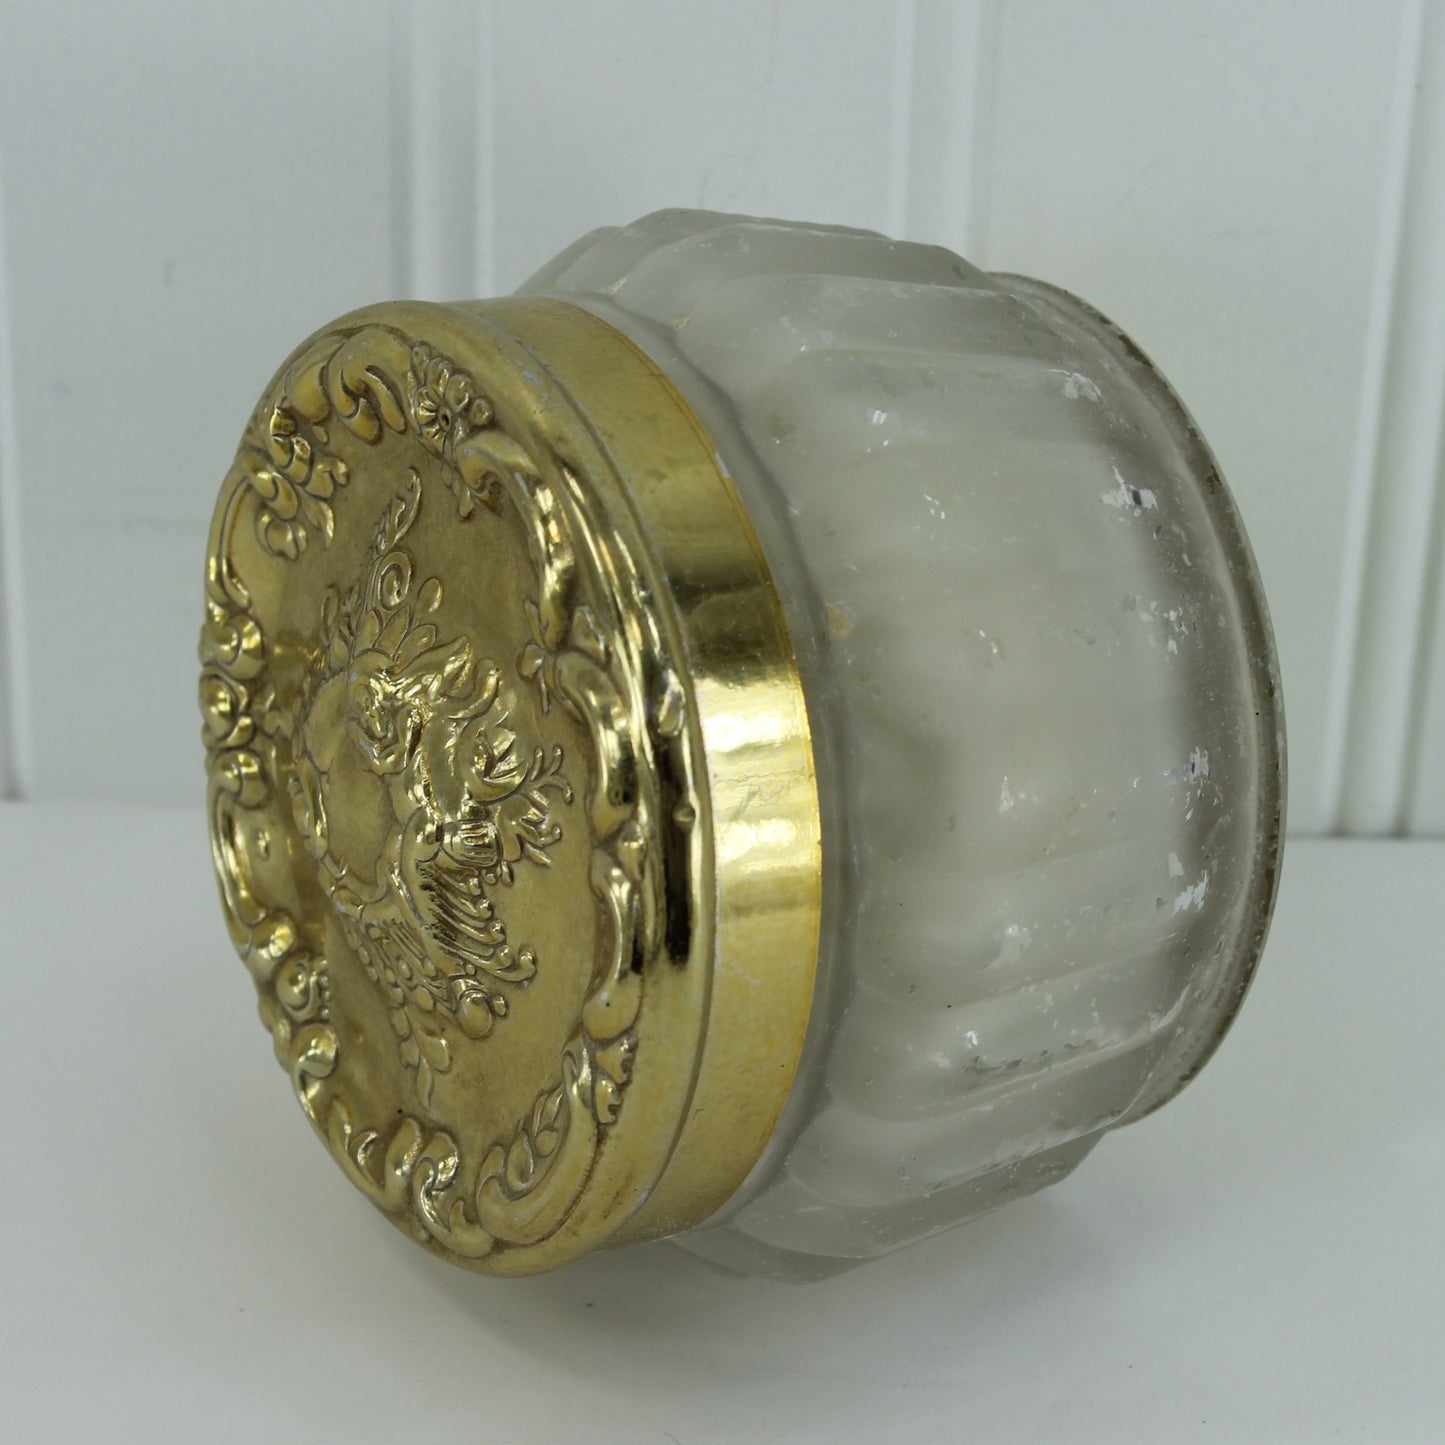 Vintage Estee Lauder Renutrive Face Powder in Glass Cherub Angel Jar Sheer Bisque